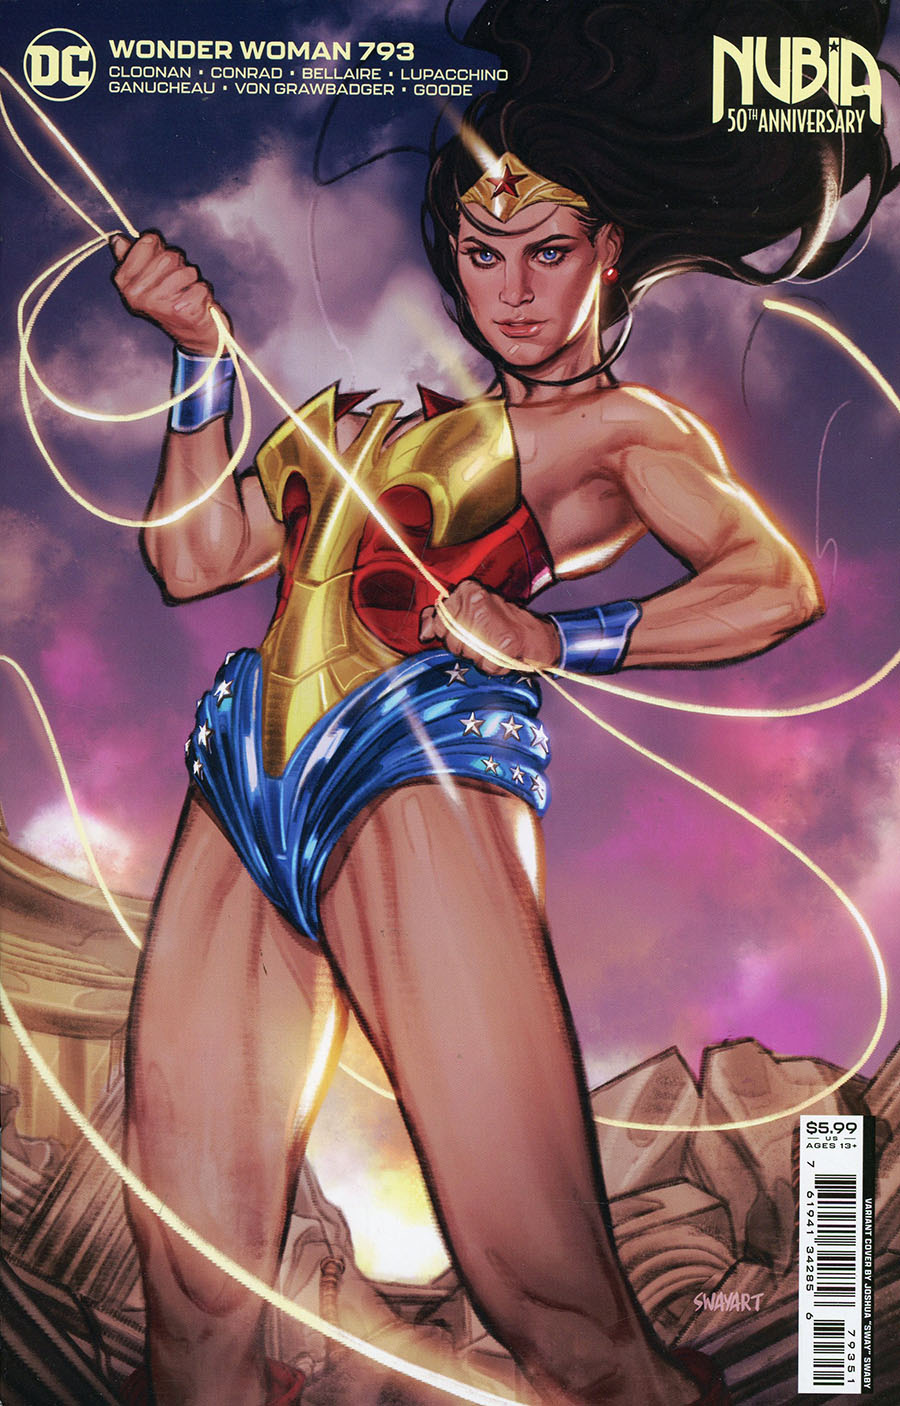 Wonder Woman Vol 5 #793 Cover C Variant Joshua Sway Swaby Nubia 50th Anniversary Card Stock Cover (Kal-El Returns Tie-In)